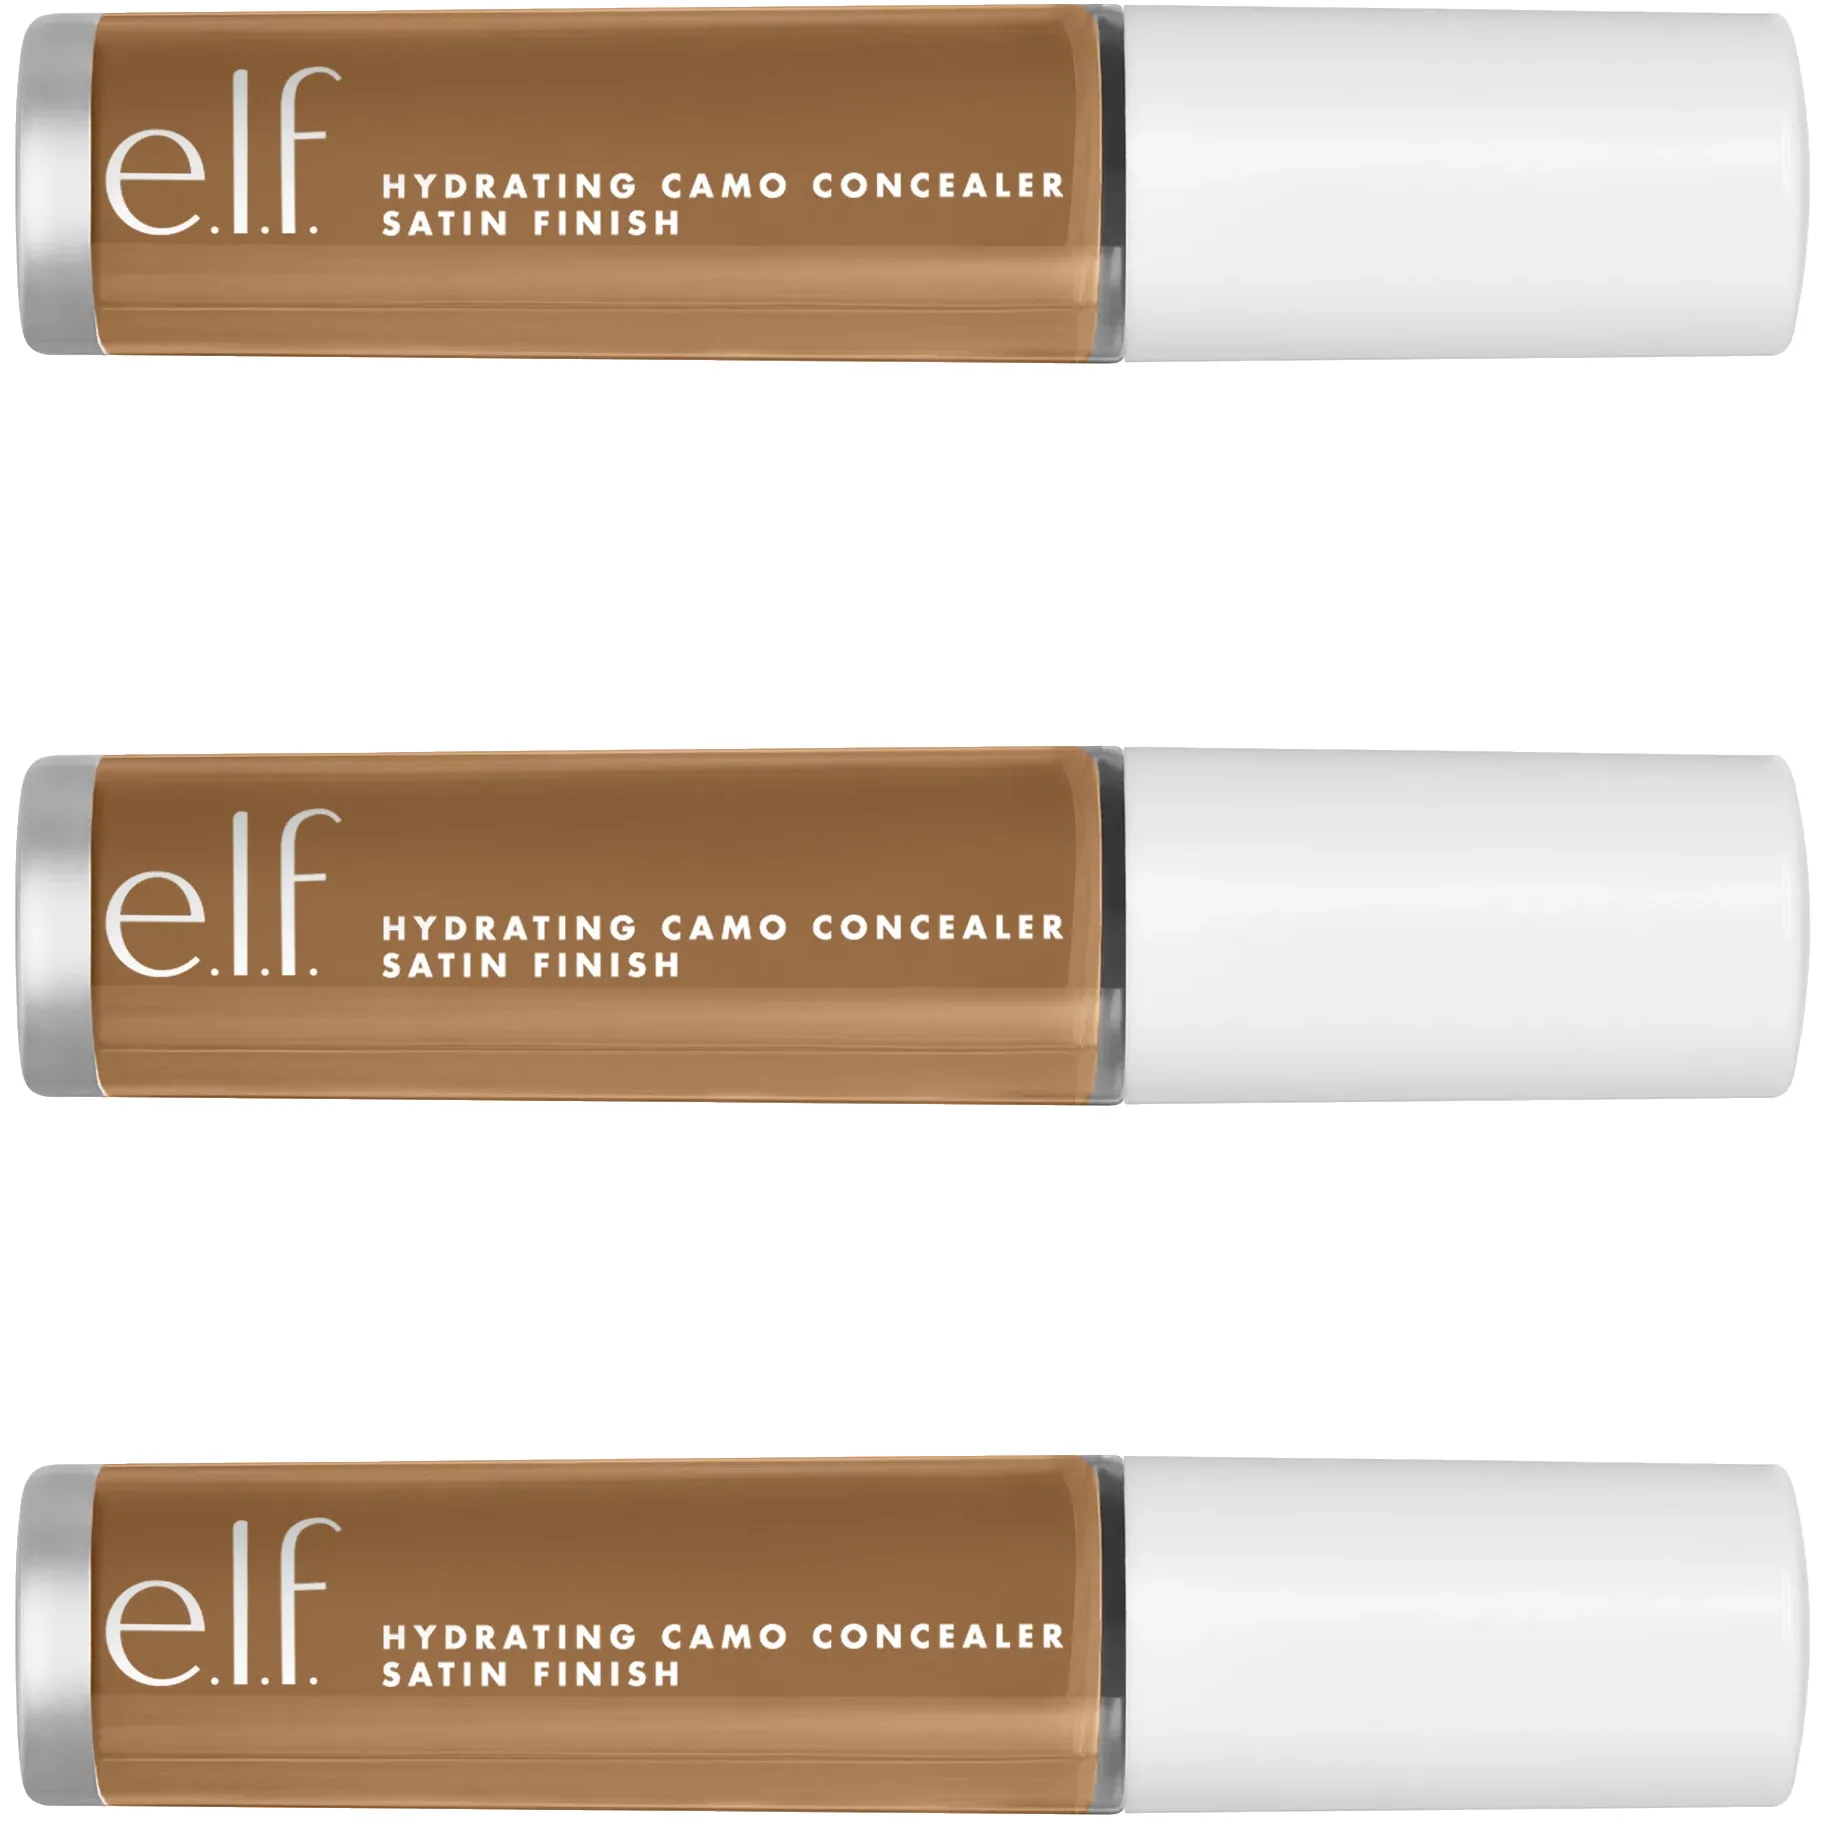 Free E.L.F. Cosmetics Hydrating Camo Concealer